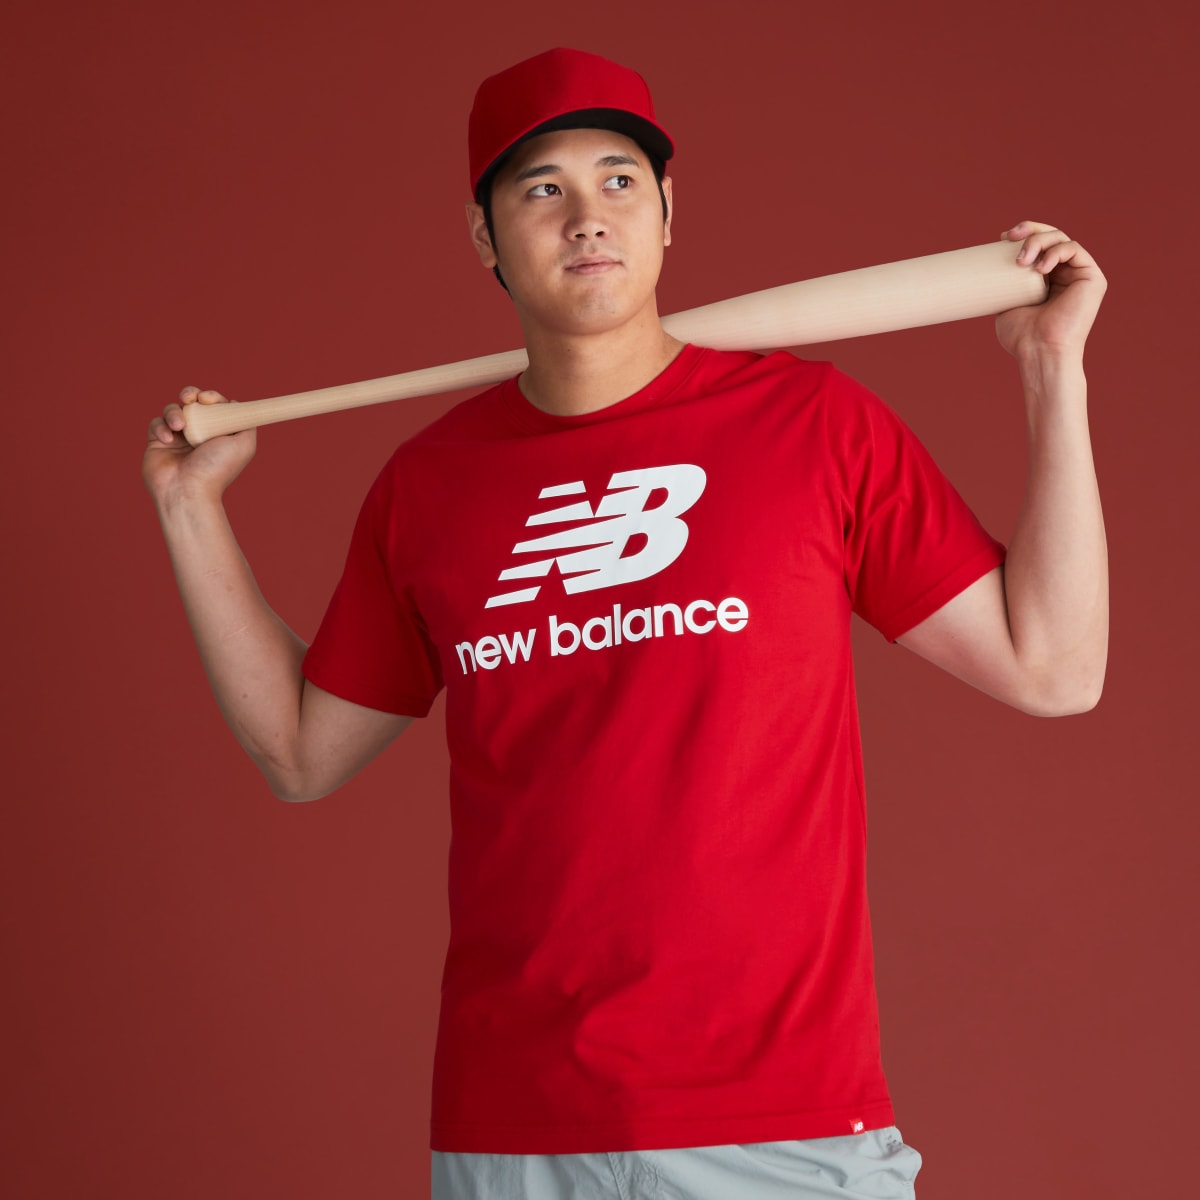 Shohei Ohtani Joins the New Balance Family on a Long-Term Deal